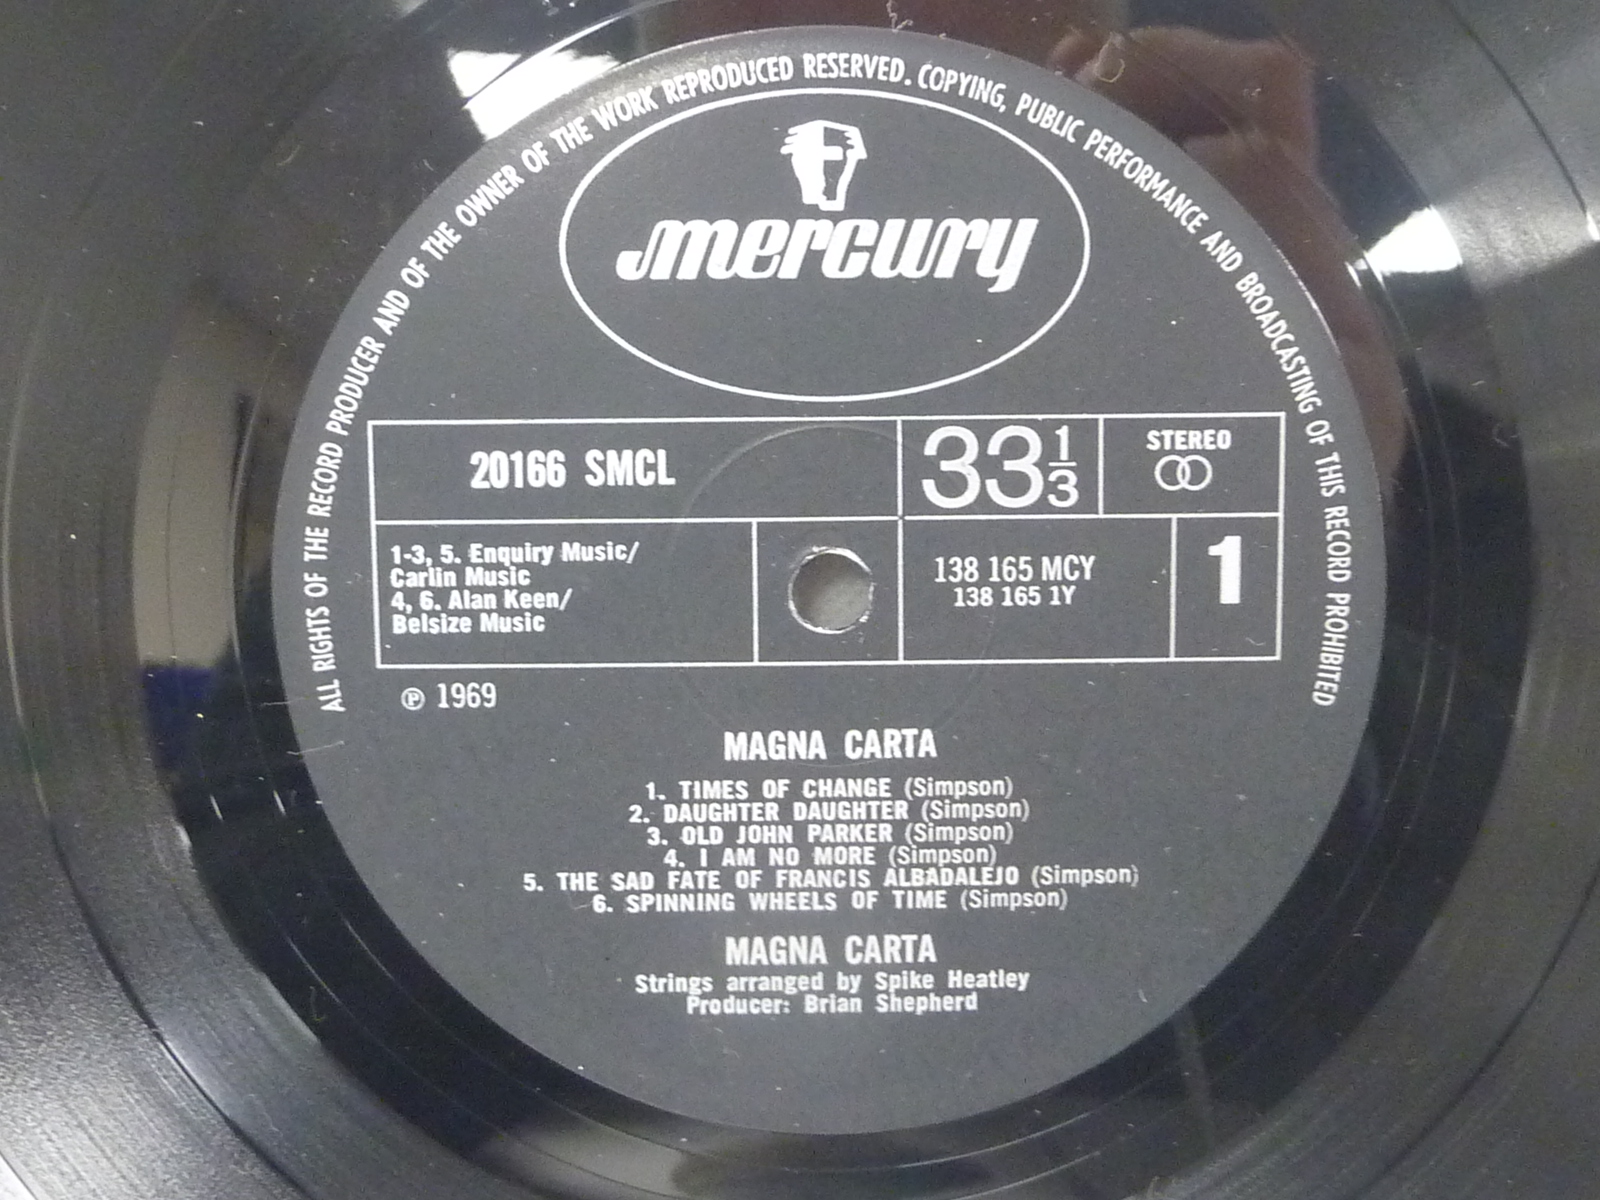 Magna Carta - Self Titled 1969 original UK LP on Mercury. Excellent condition. - Image 3 of 3